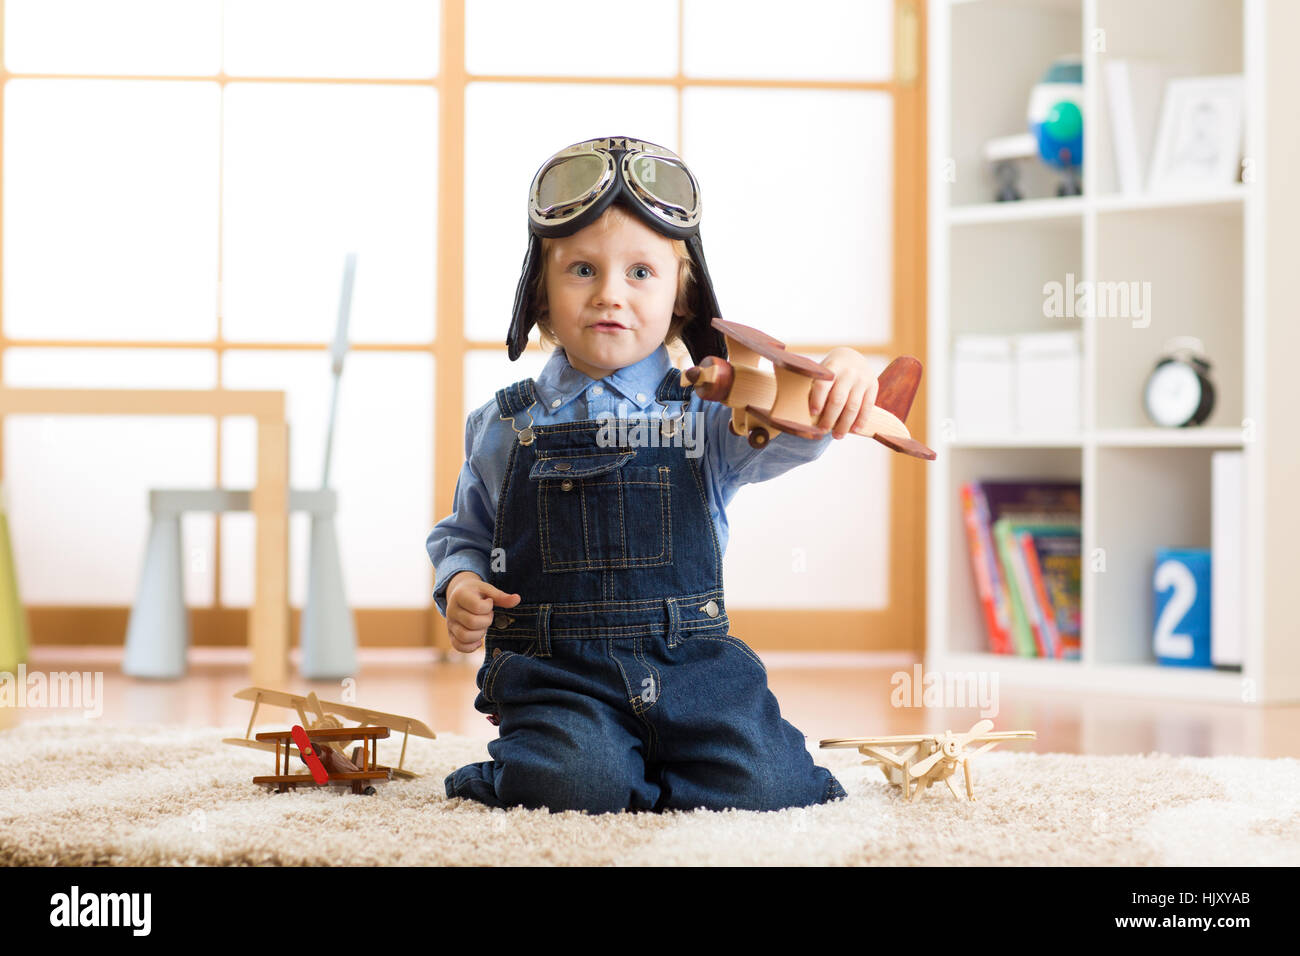 Kid boy weared aviator helmet plays with wooden toy plane in his children room Stock Photo